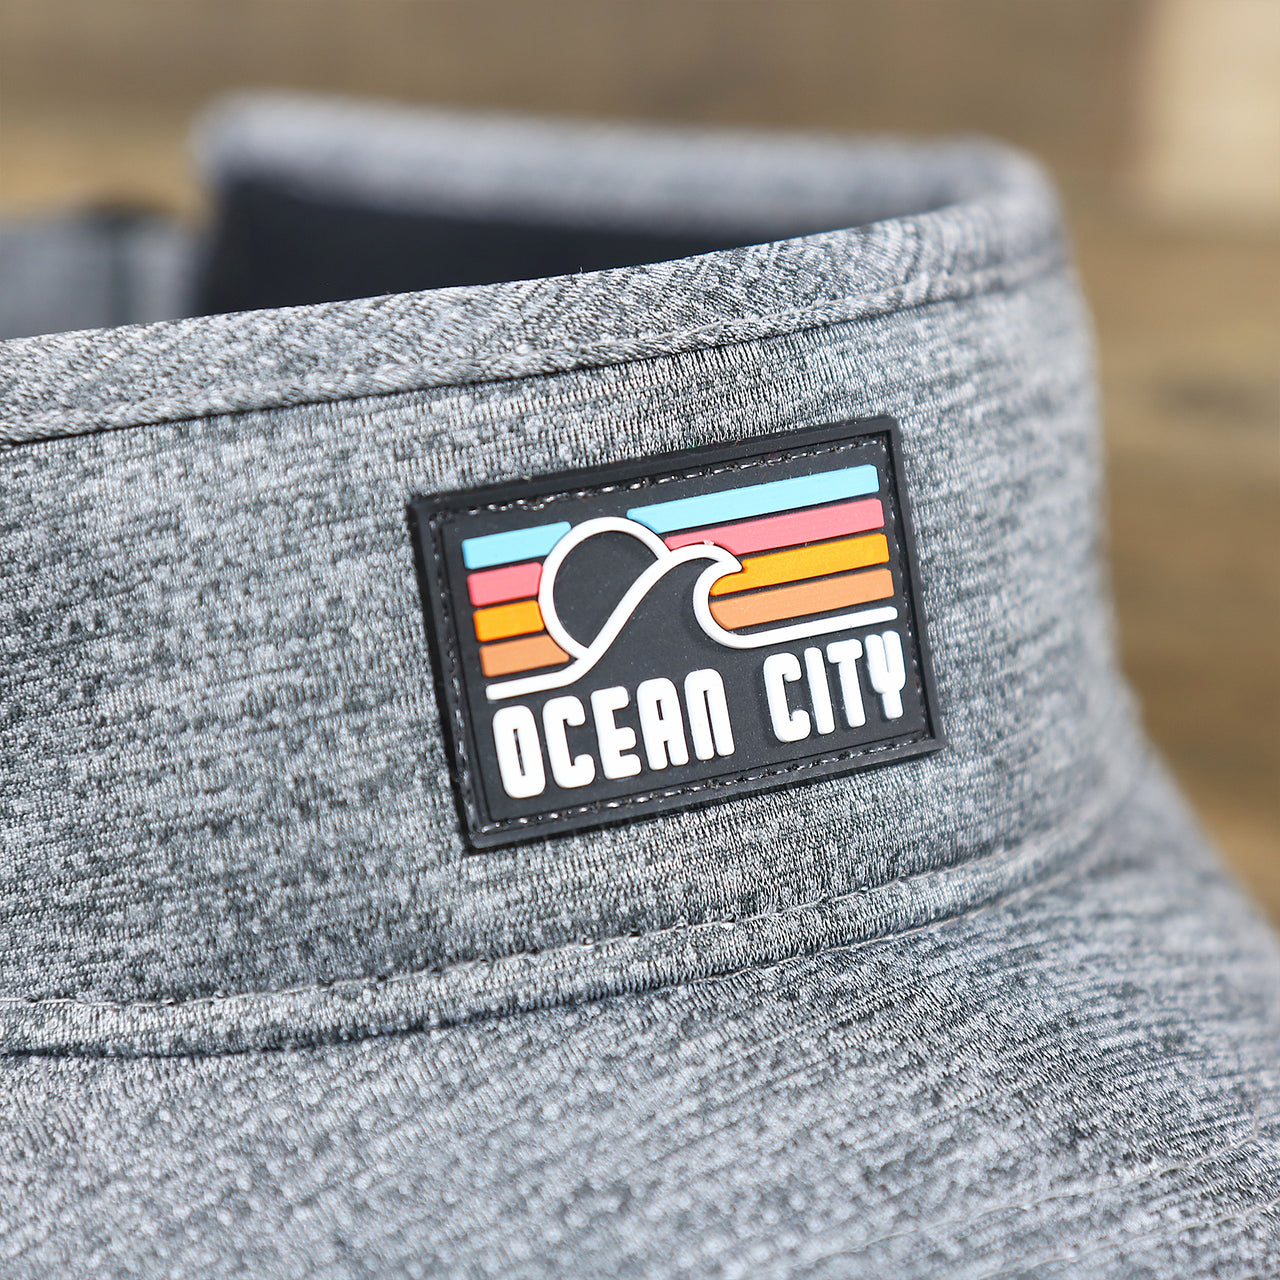 The Ocean City Rubber Patch on the New Jersey High Point PVC Ocean City Rubber Patch Cool Fit Adjustable Visor | Graphite Gray Visor